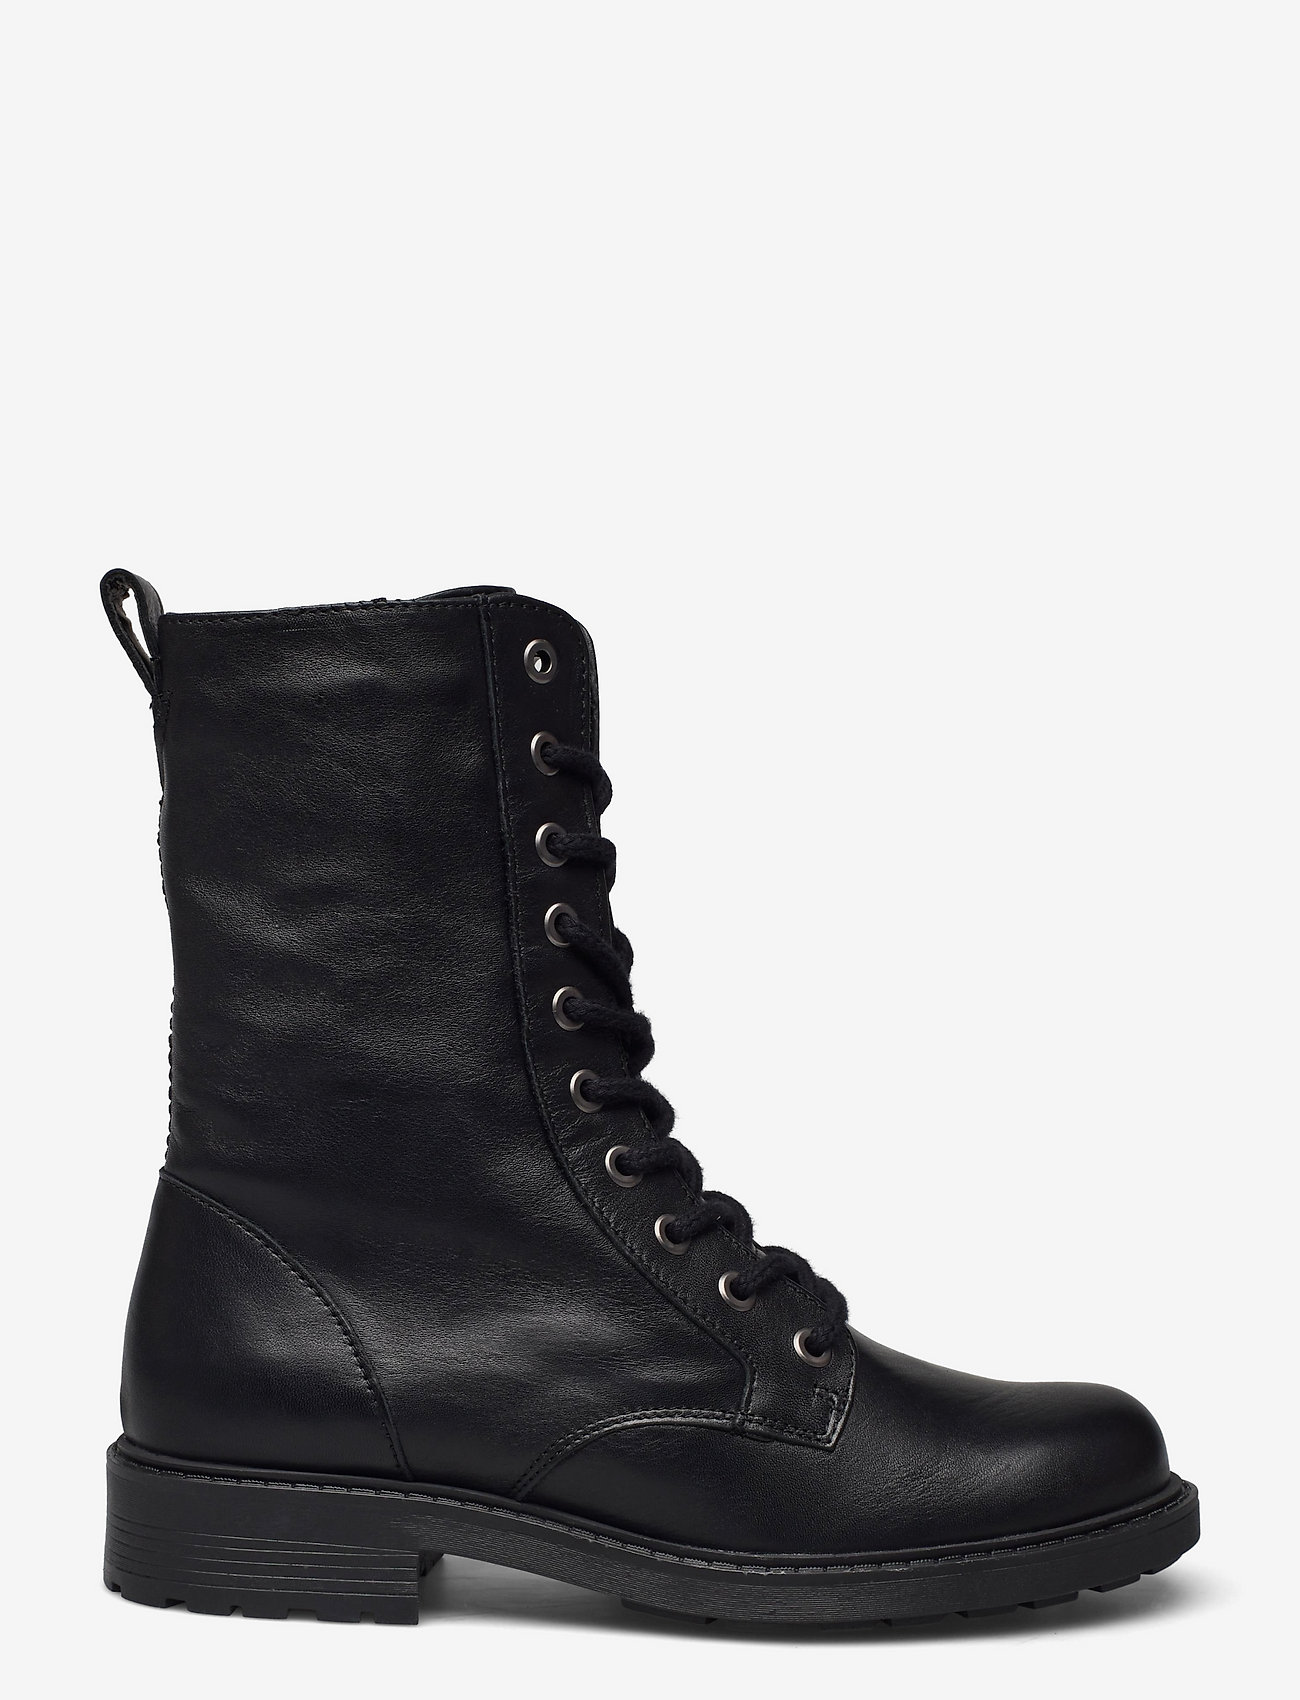 Clarks - Orinoco2 Style - geschnürte stiefel - black leather - 1